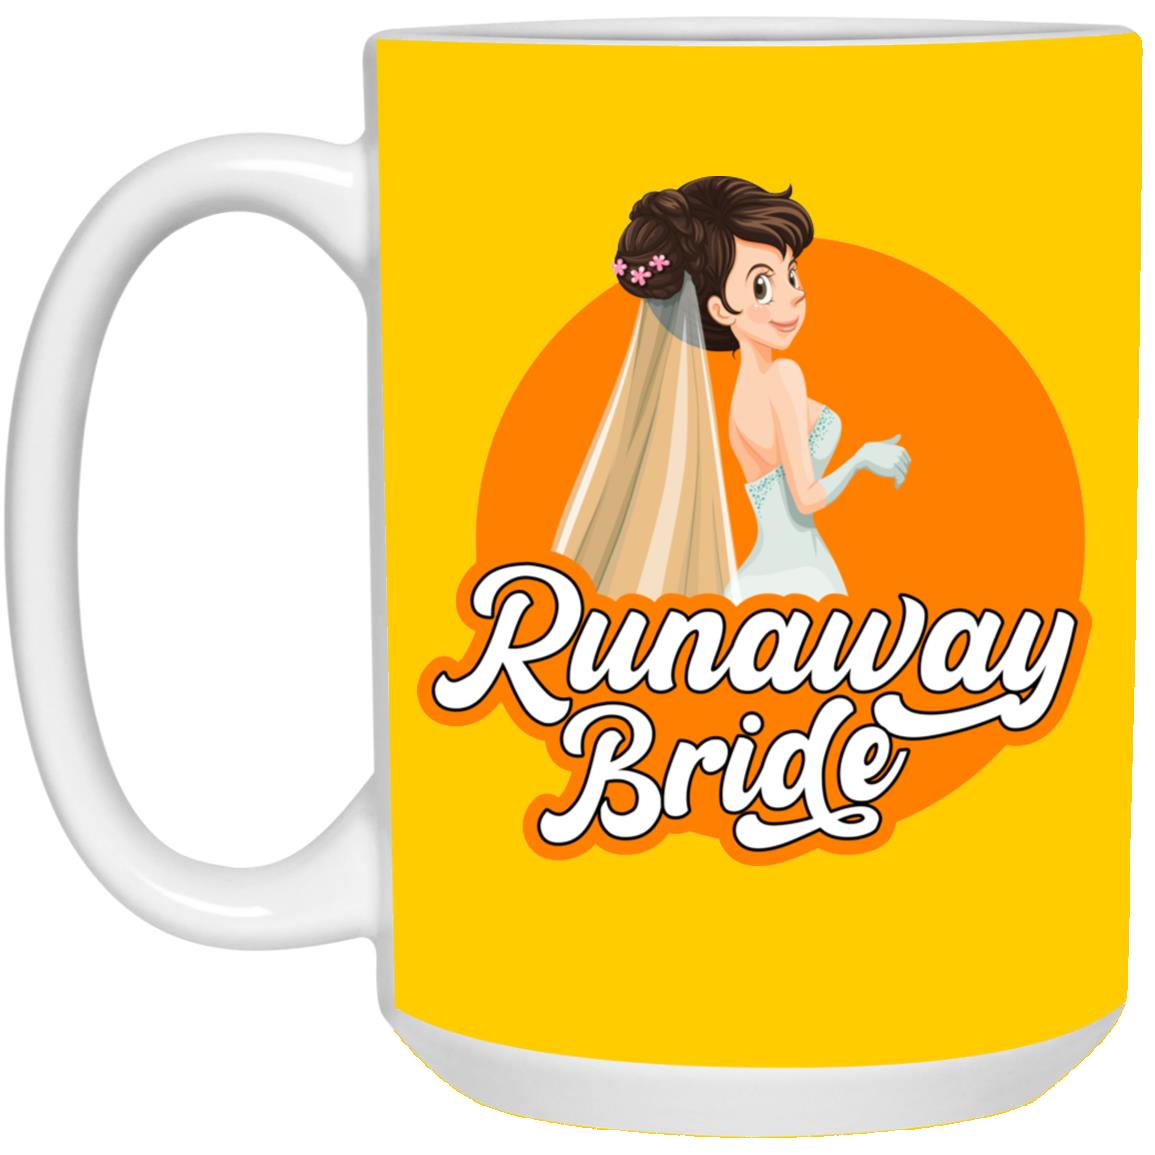 Runaway Bride  Coffee Mug (15 oz.)